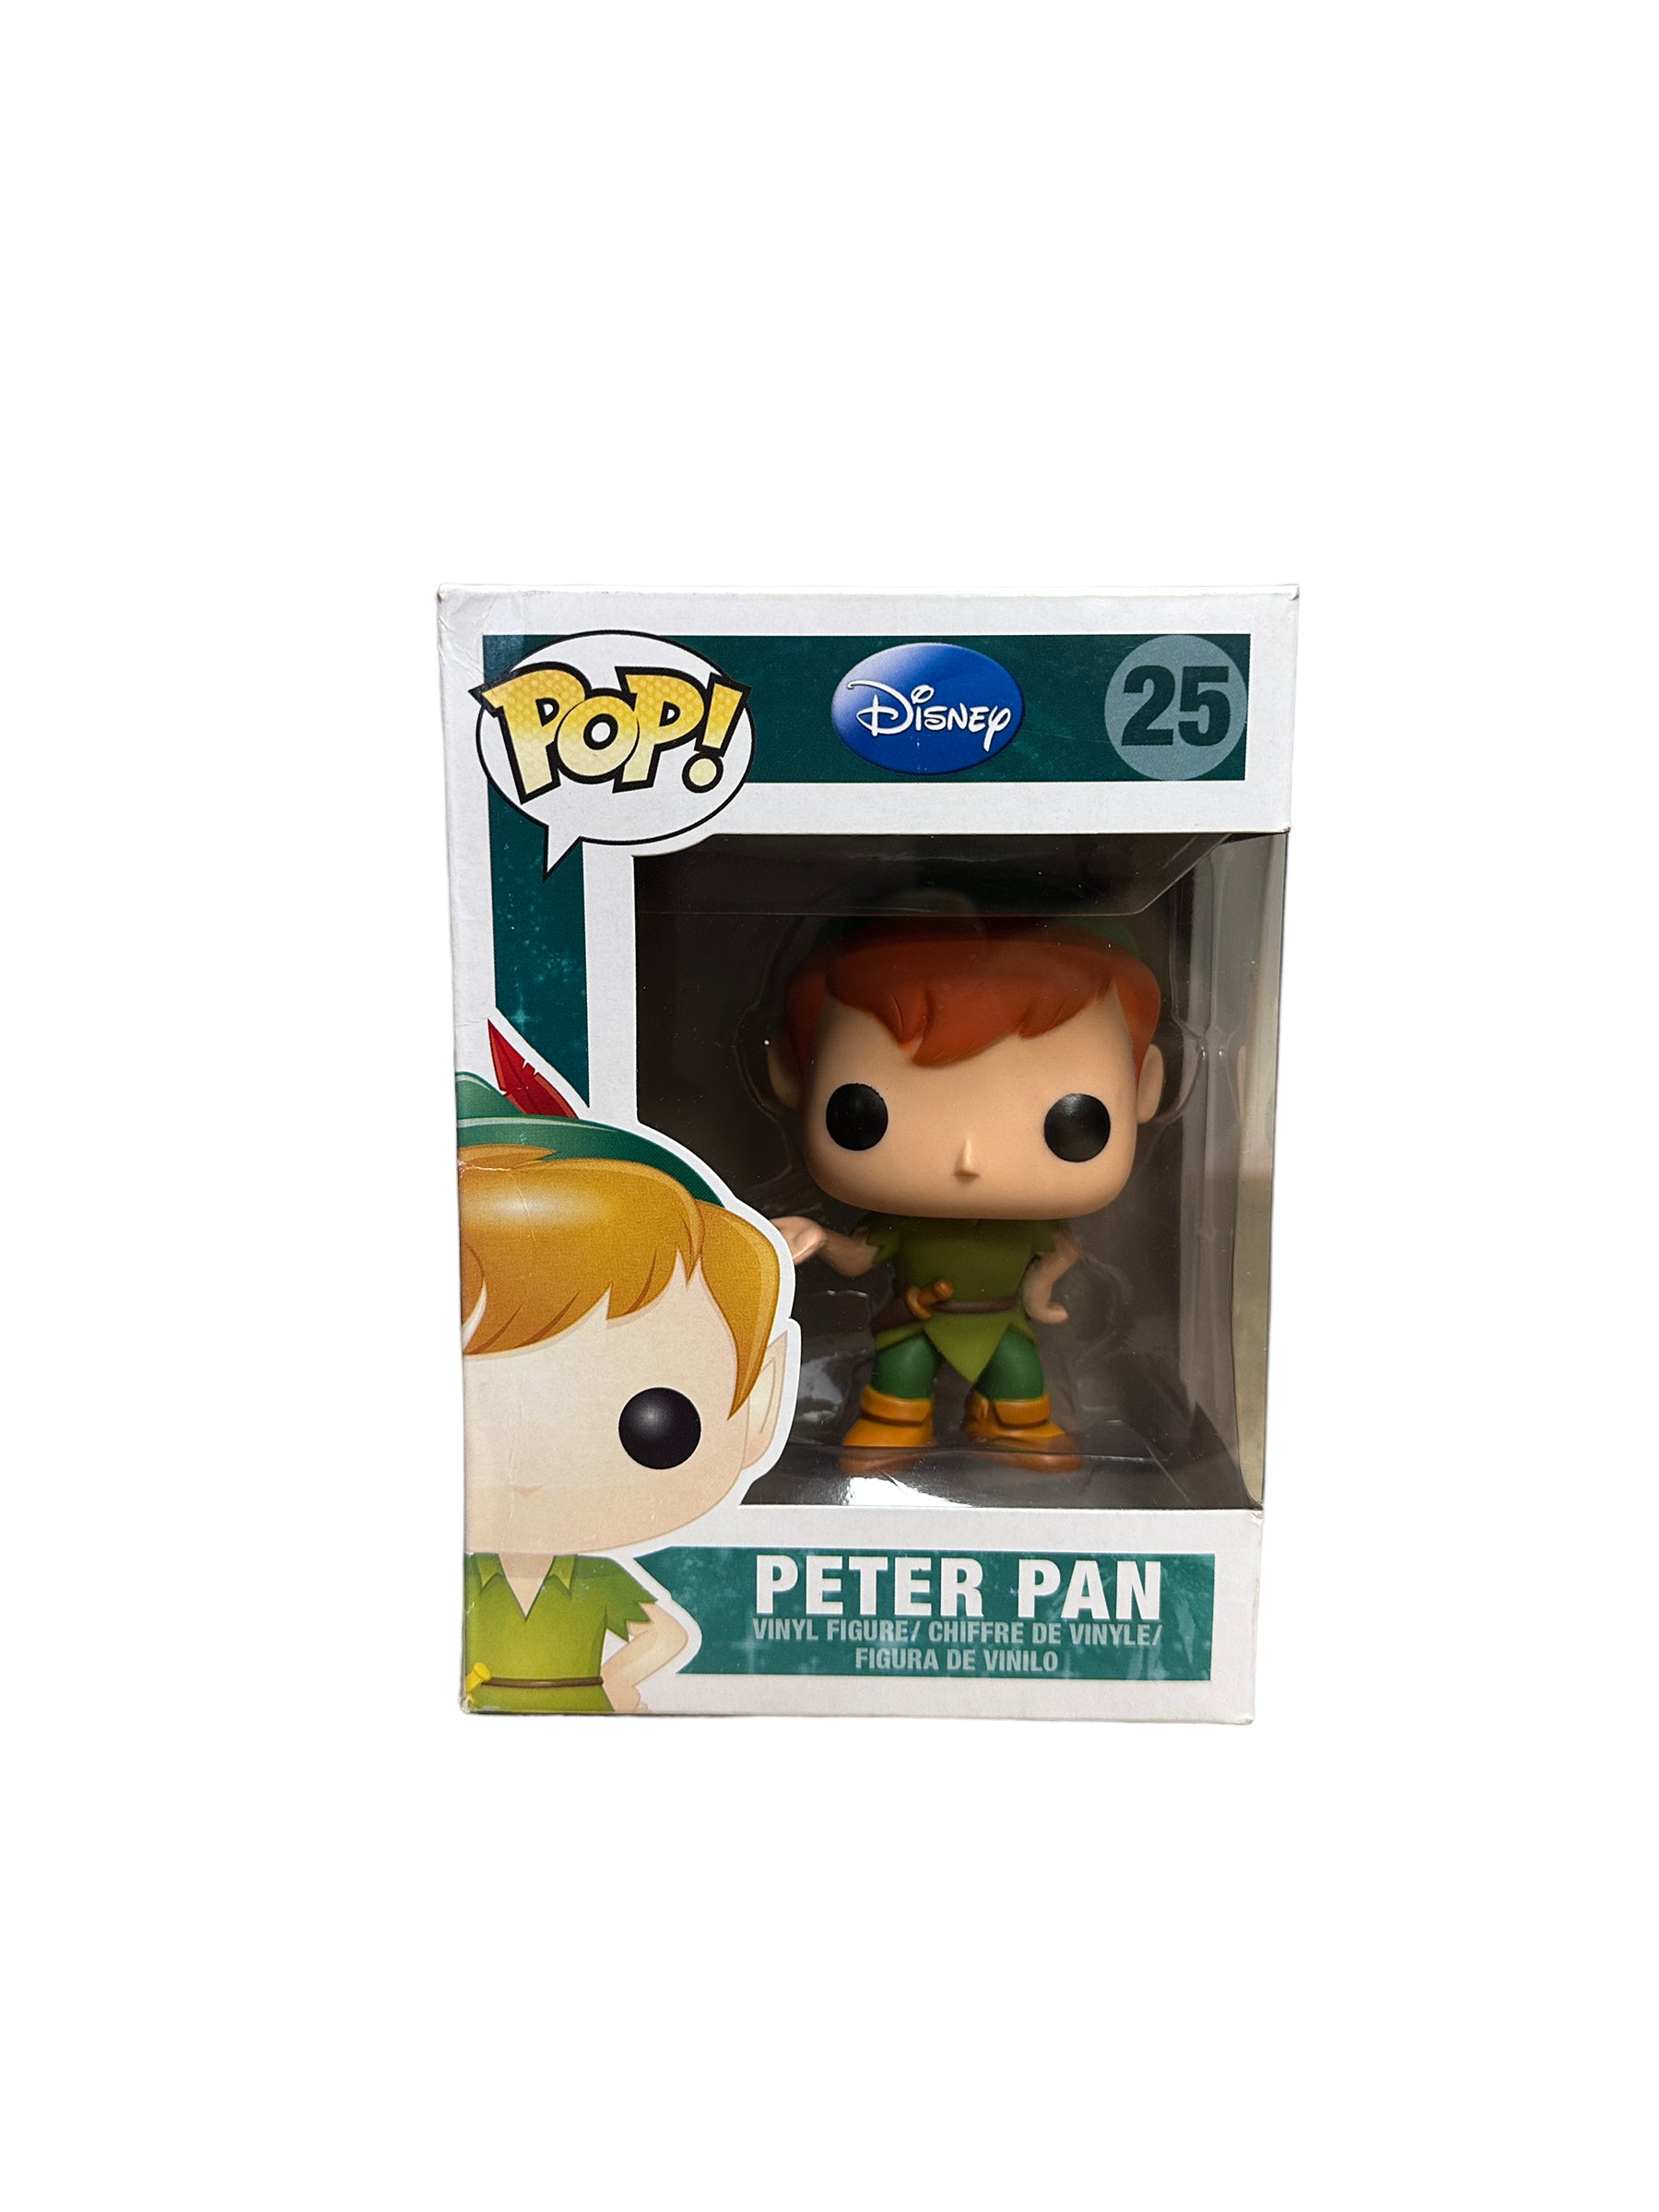 Peter Pan #25 Funko Pop! - Disney Series 3 - 2013 Pop! - Condition 6/10